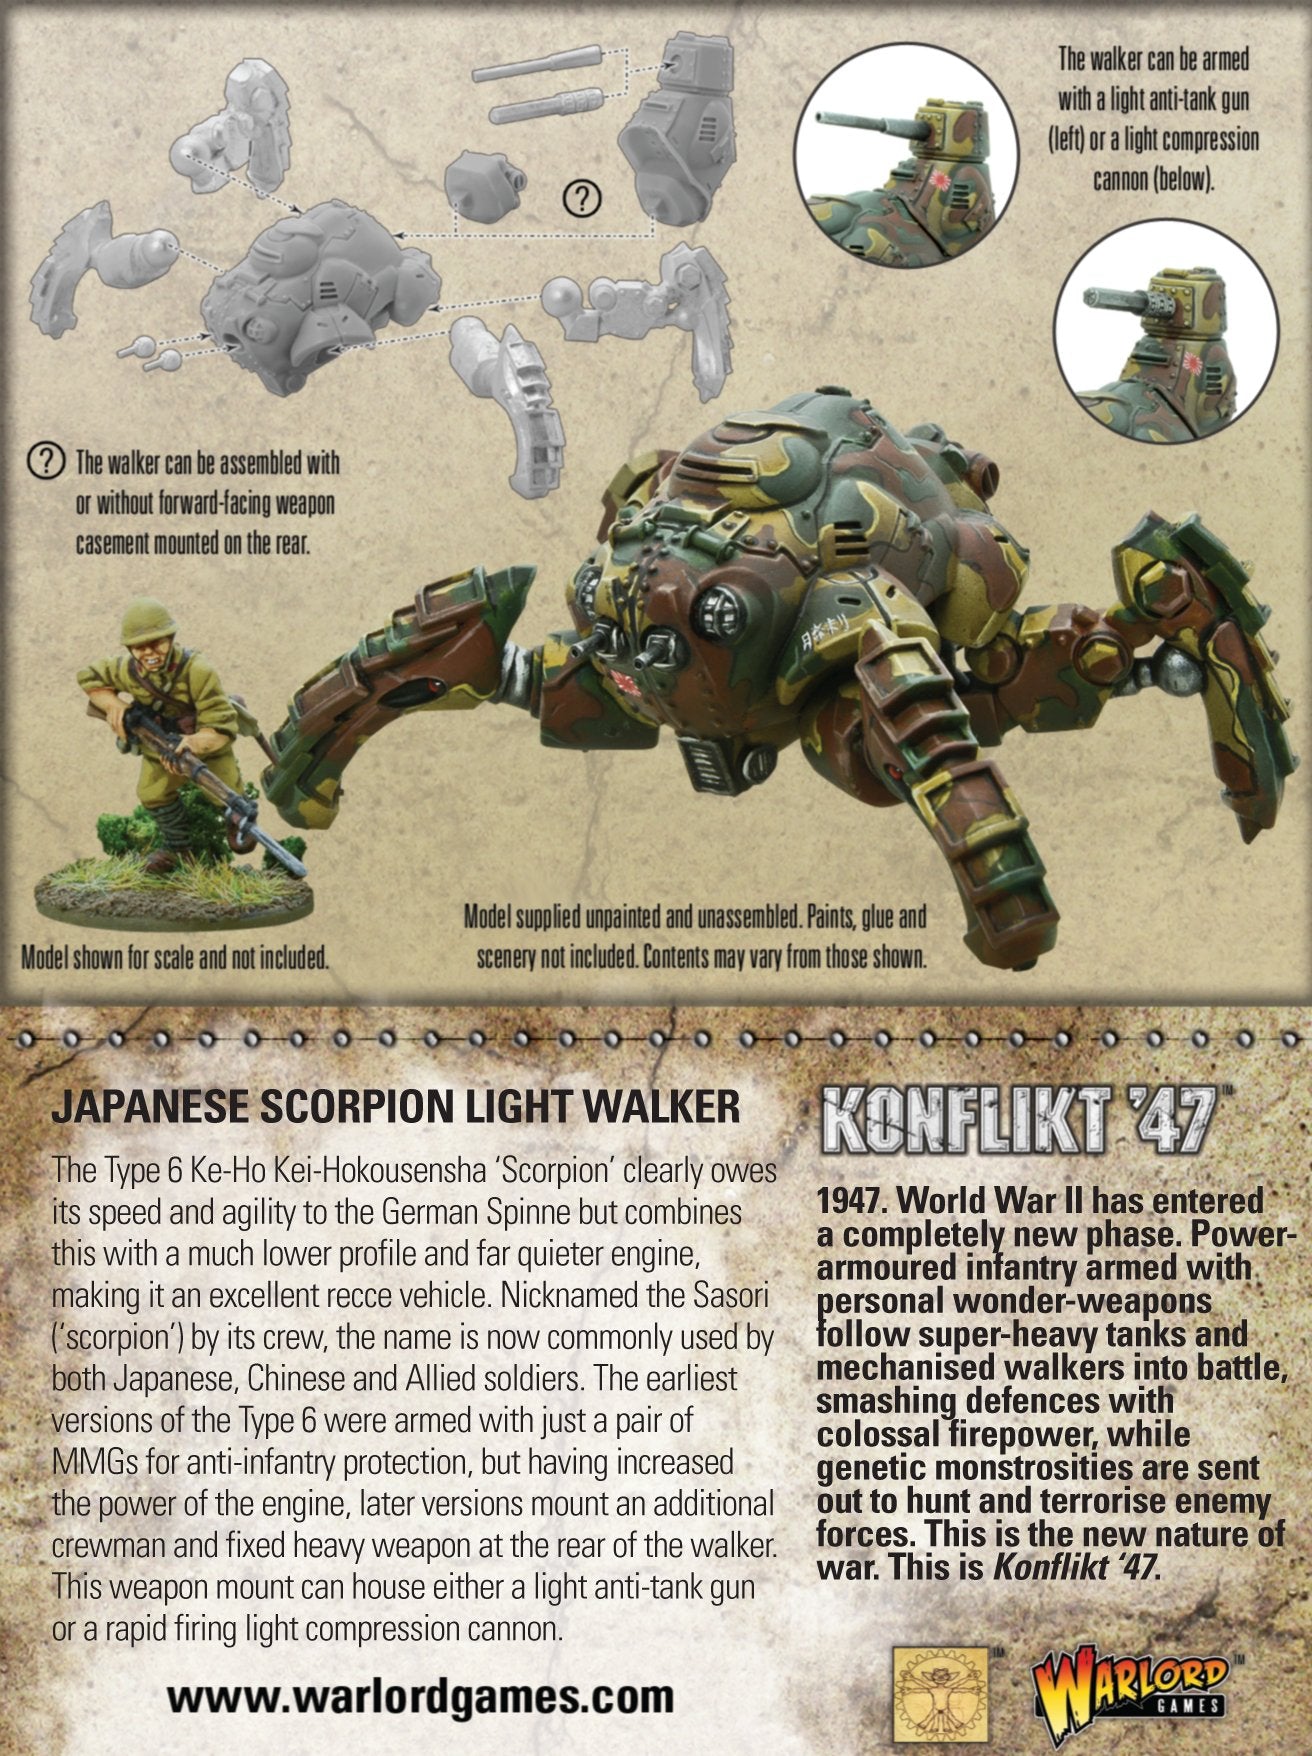 Japanese Scorpion light walker